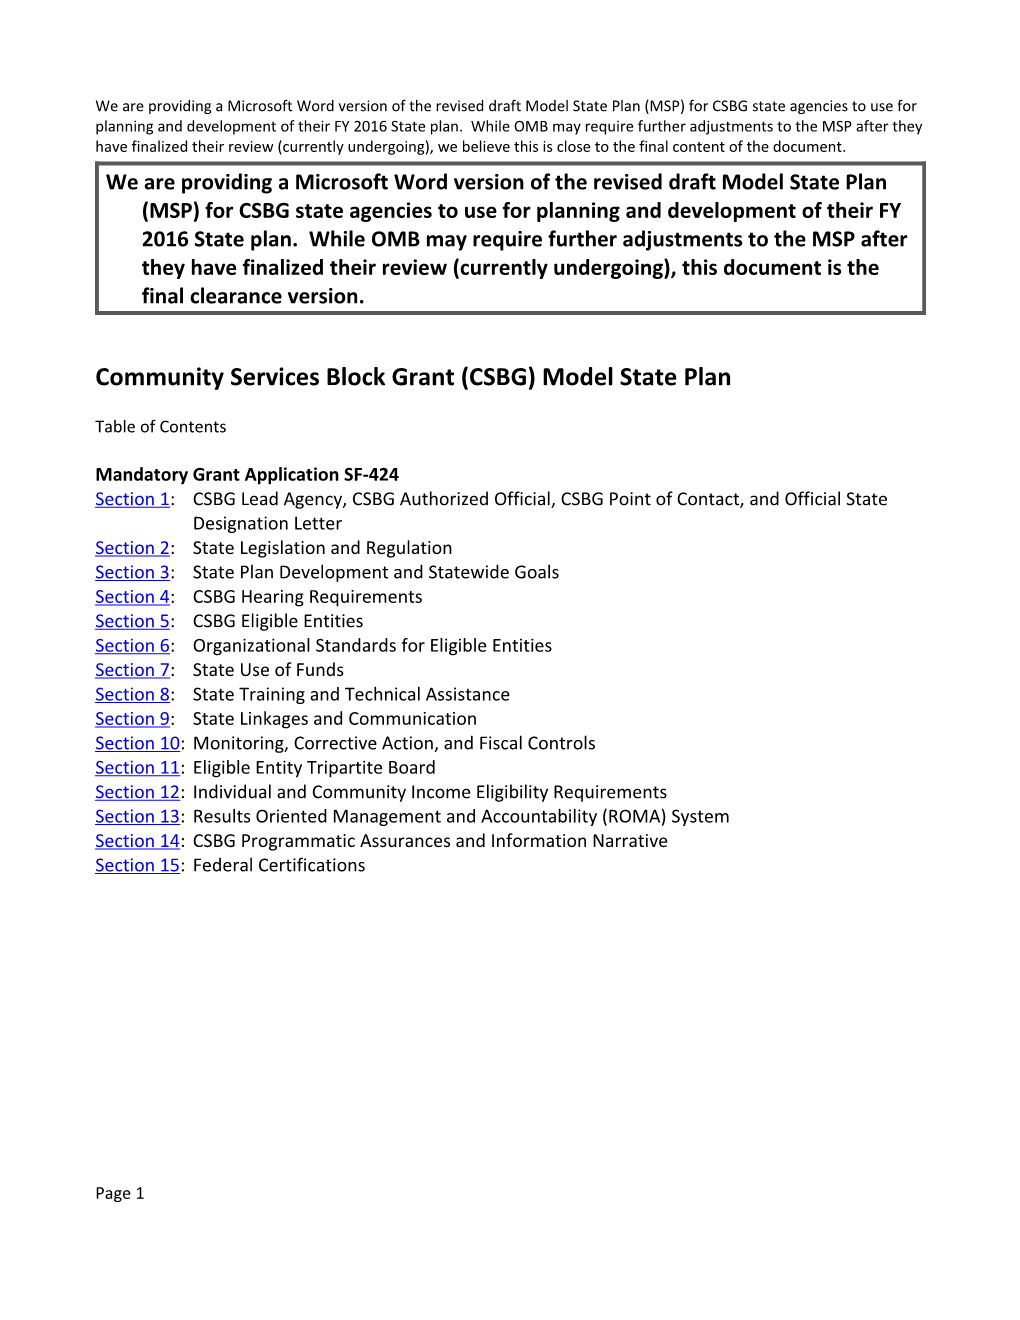 Community Services Block Grant (CSBG) Model State Plan